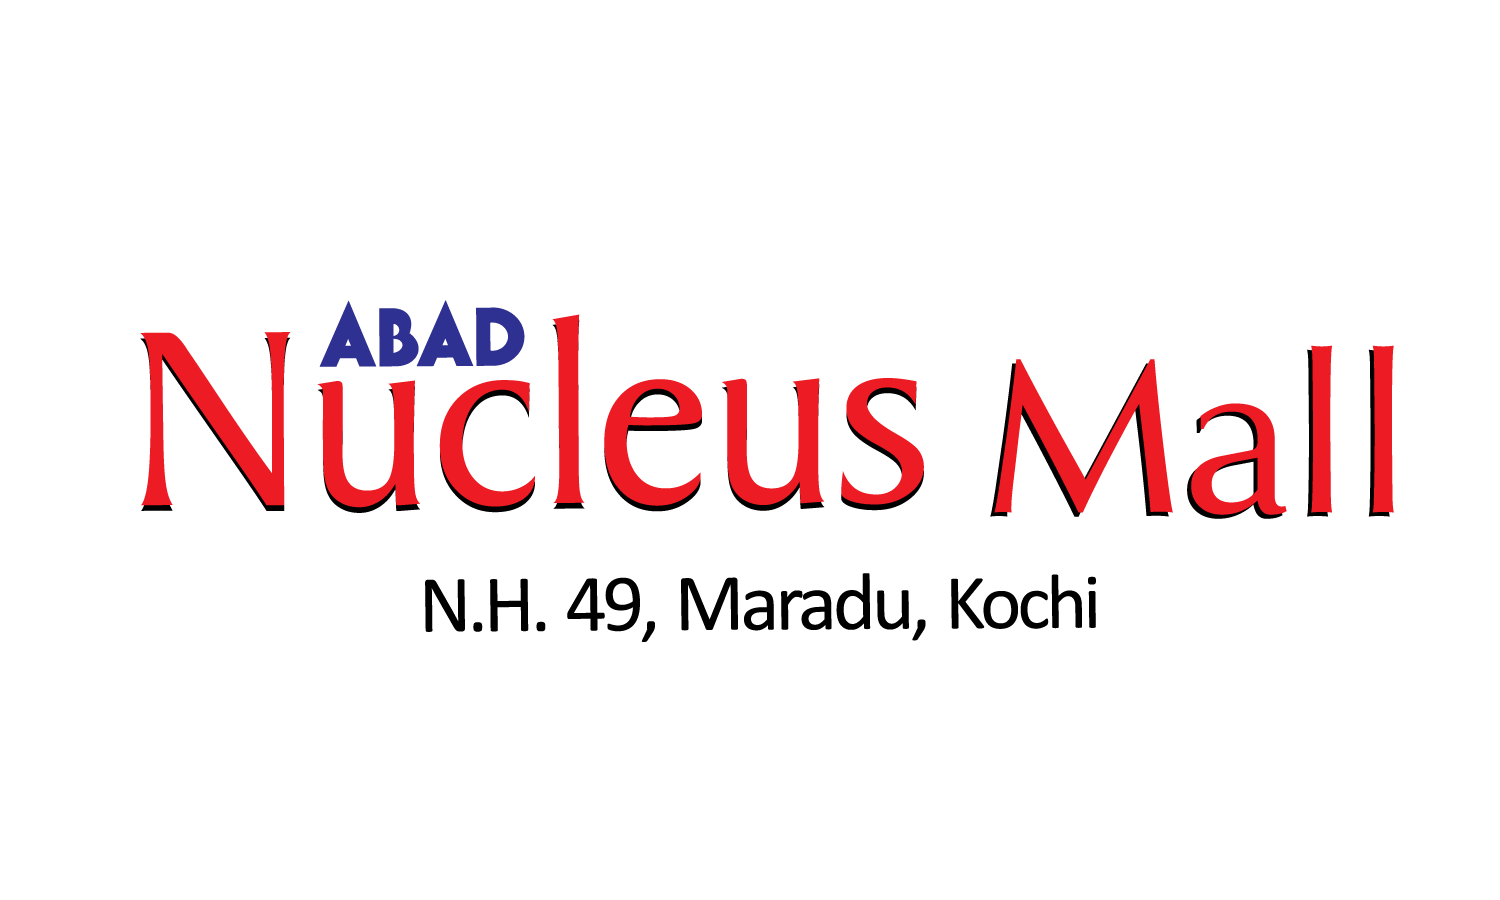 ABAD Nucleus Mall Logo